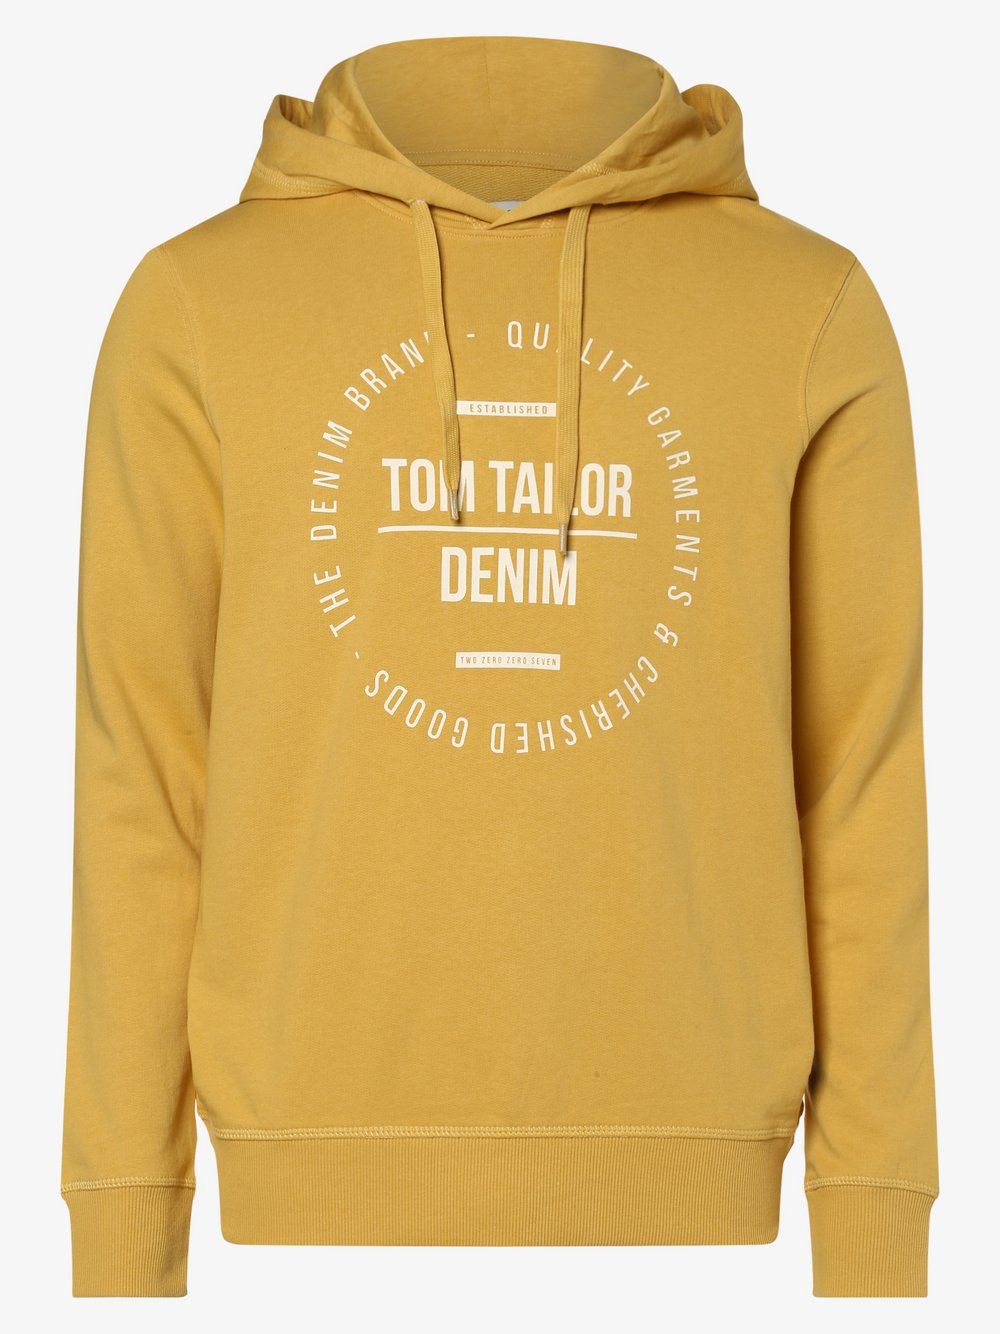 Tom Tailor Denim - Męska bluza z kapturem, żółty